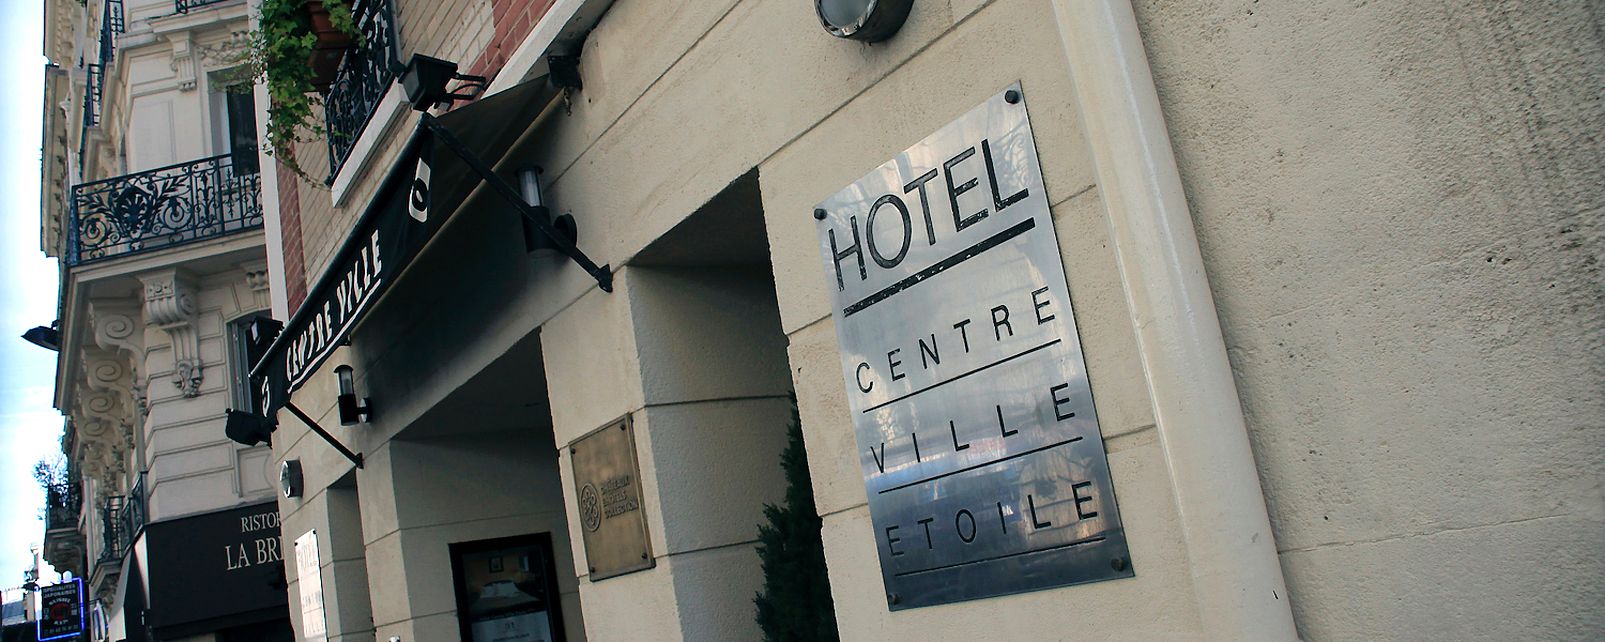 Hotel Centre Ville Etoile